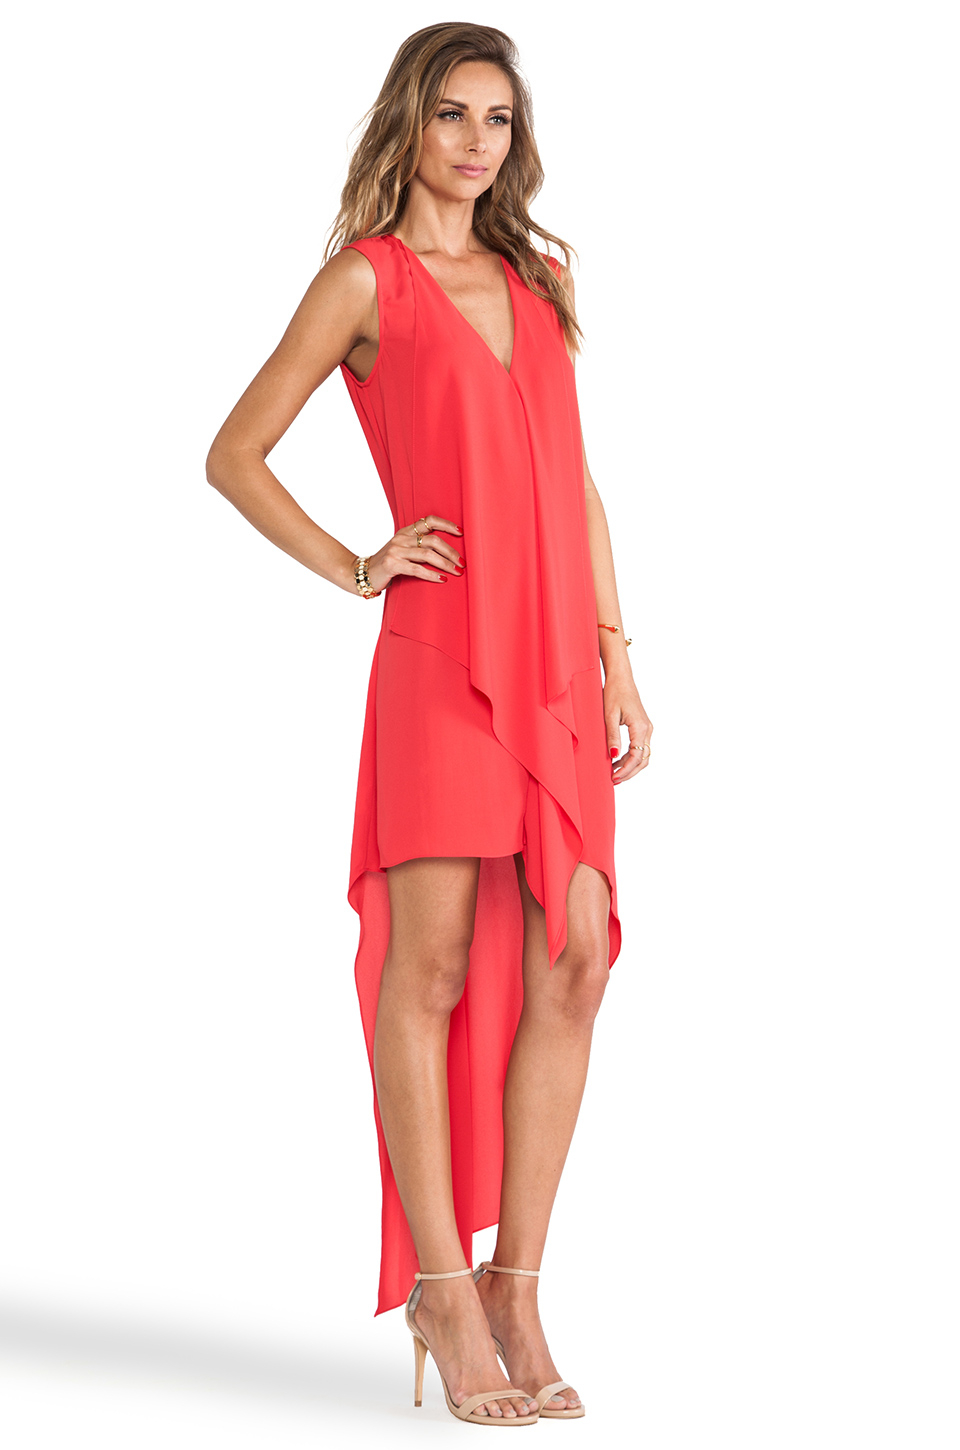 Lyst - Bcbgmaxazria Tara Ruffle Front Dress in Red